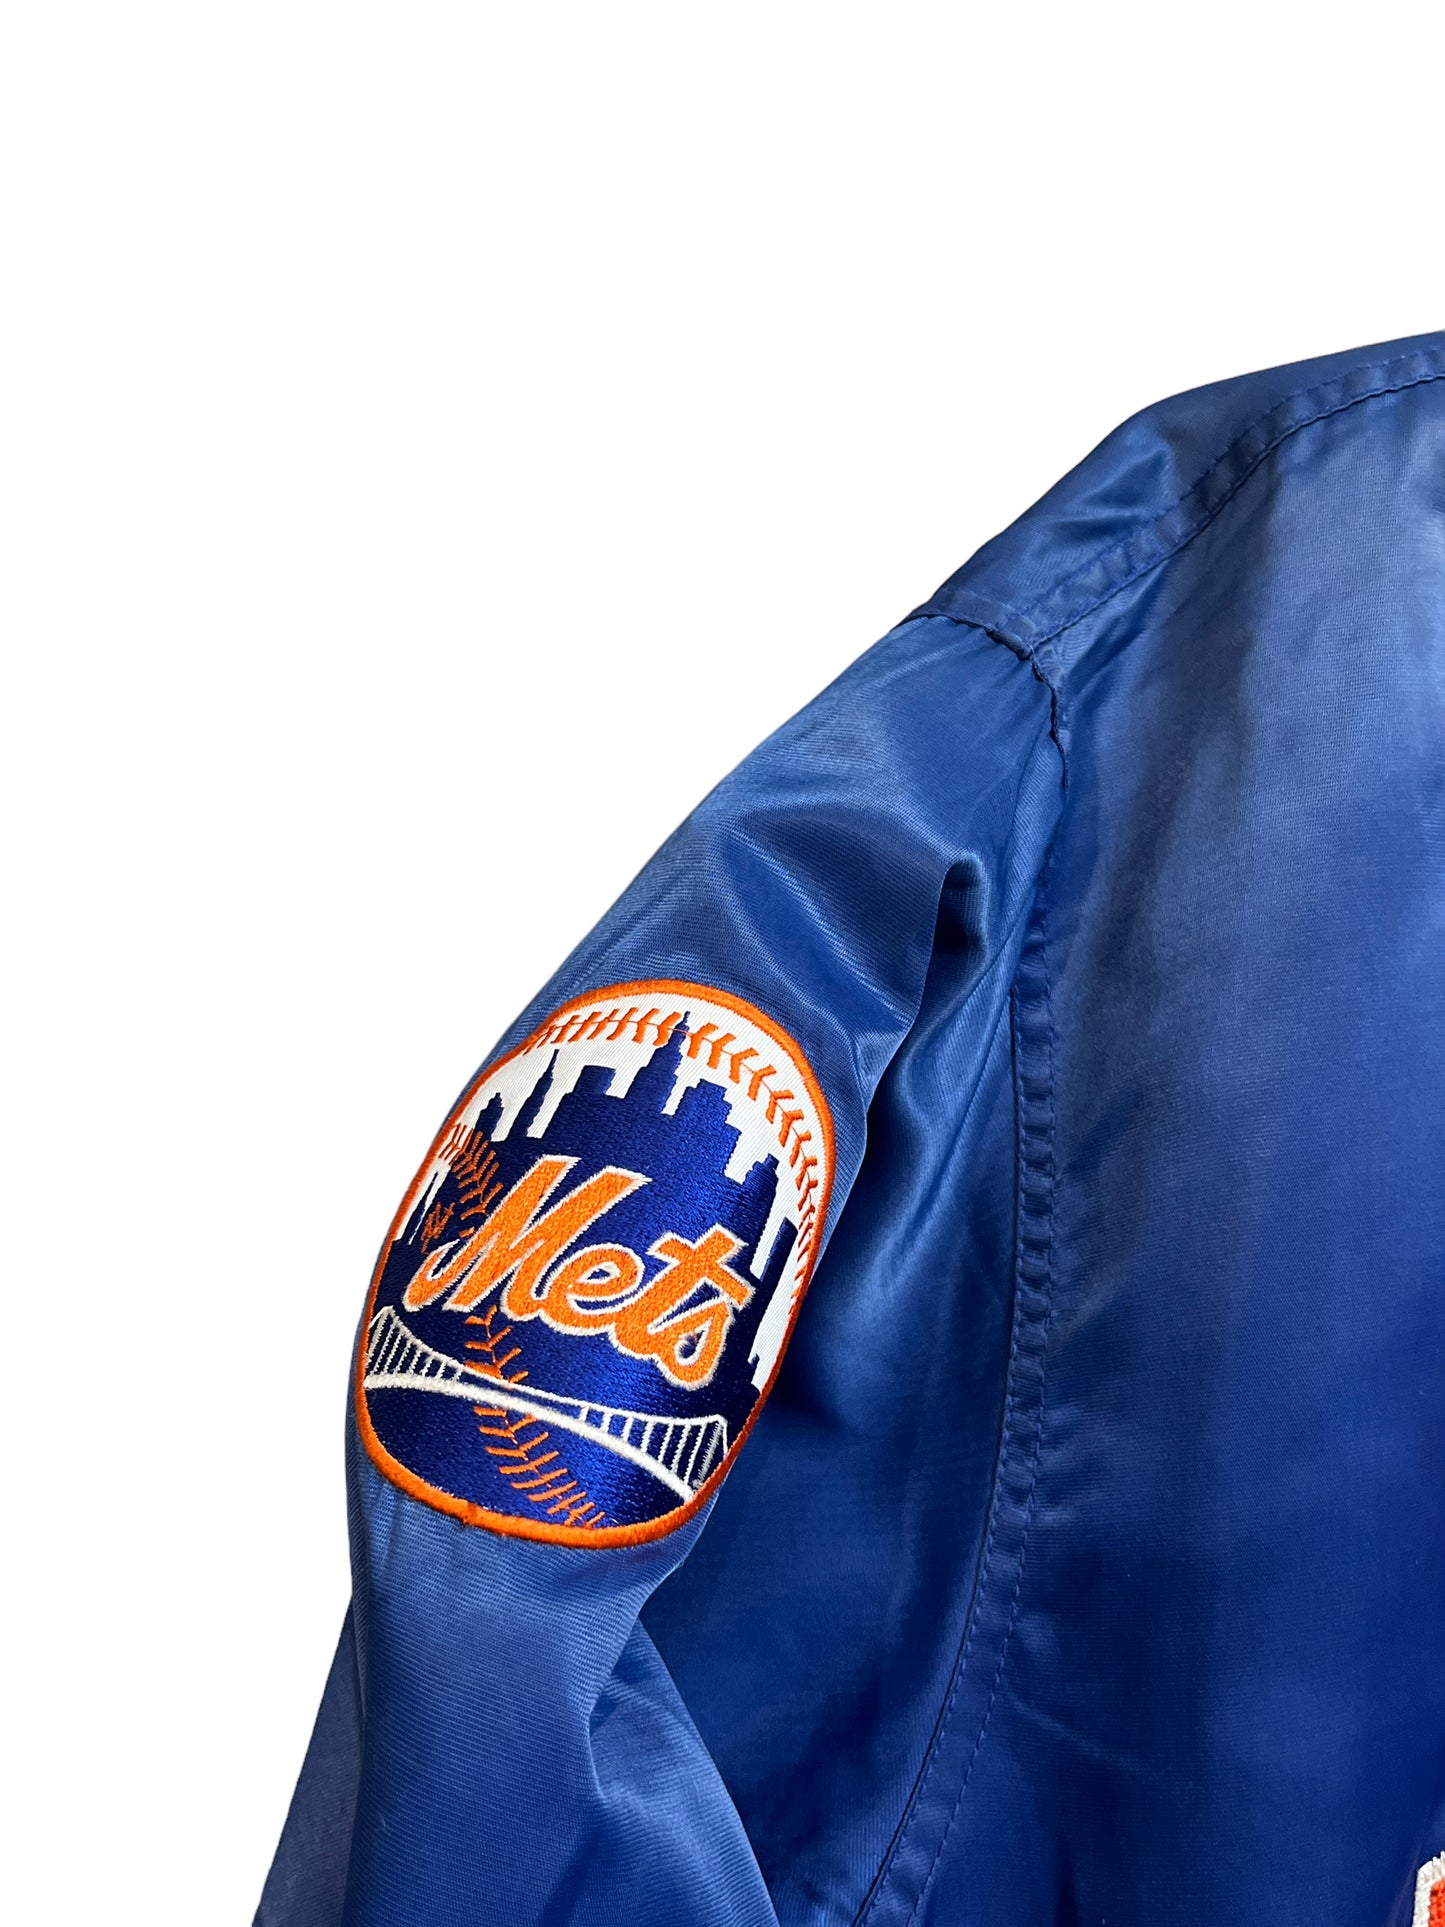 Vintage Starter Diamond Collection New York Mets Jacket